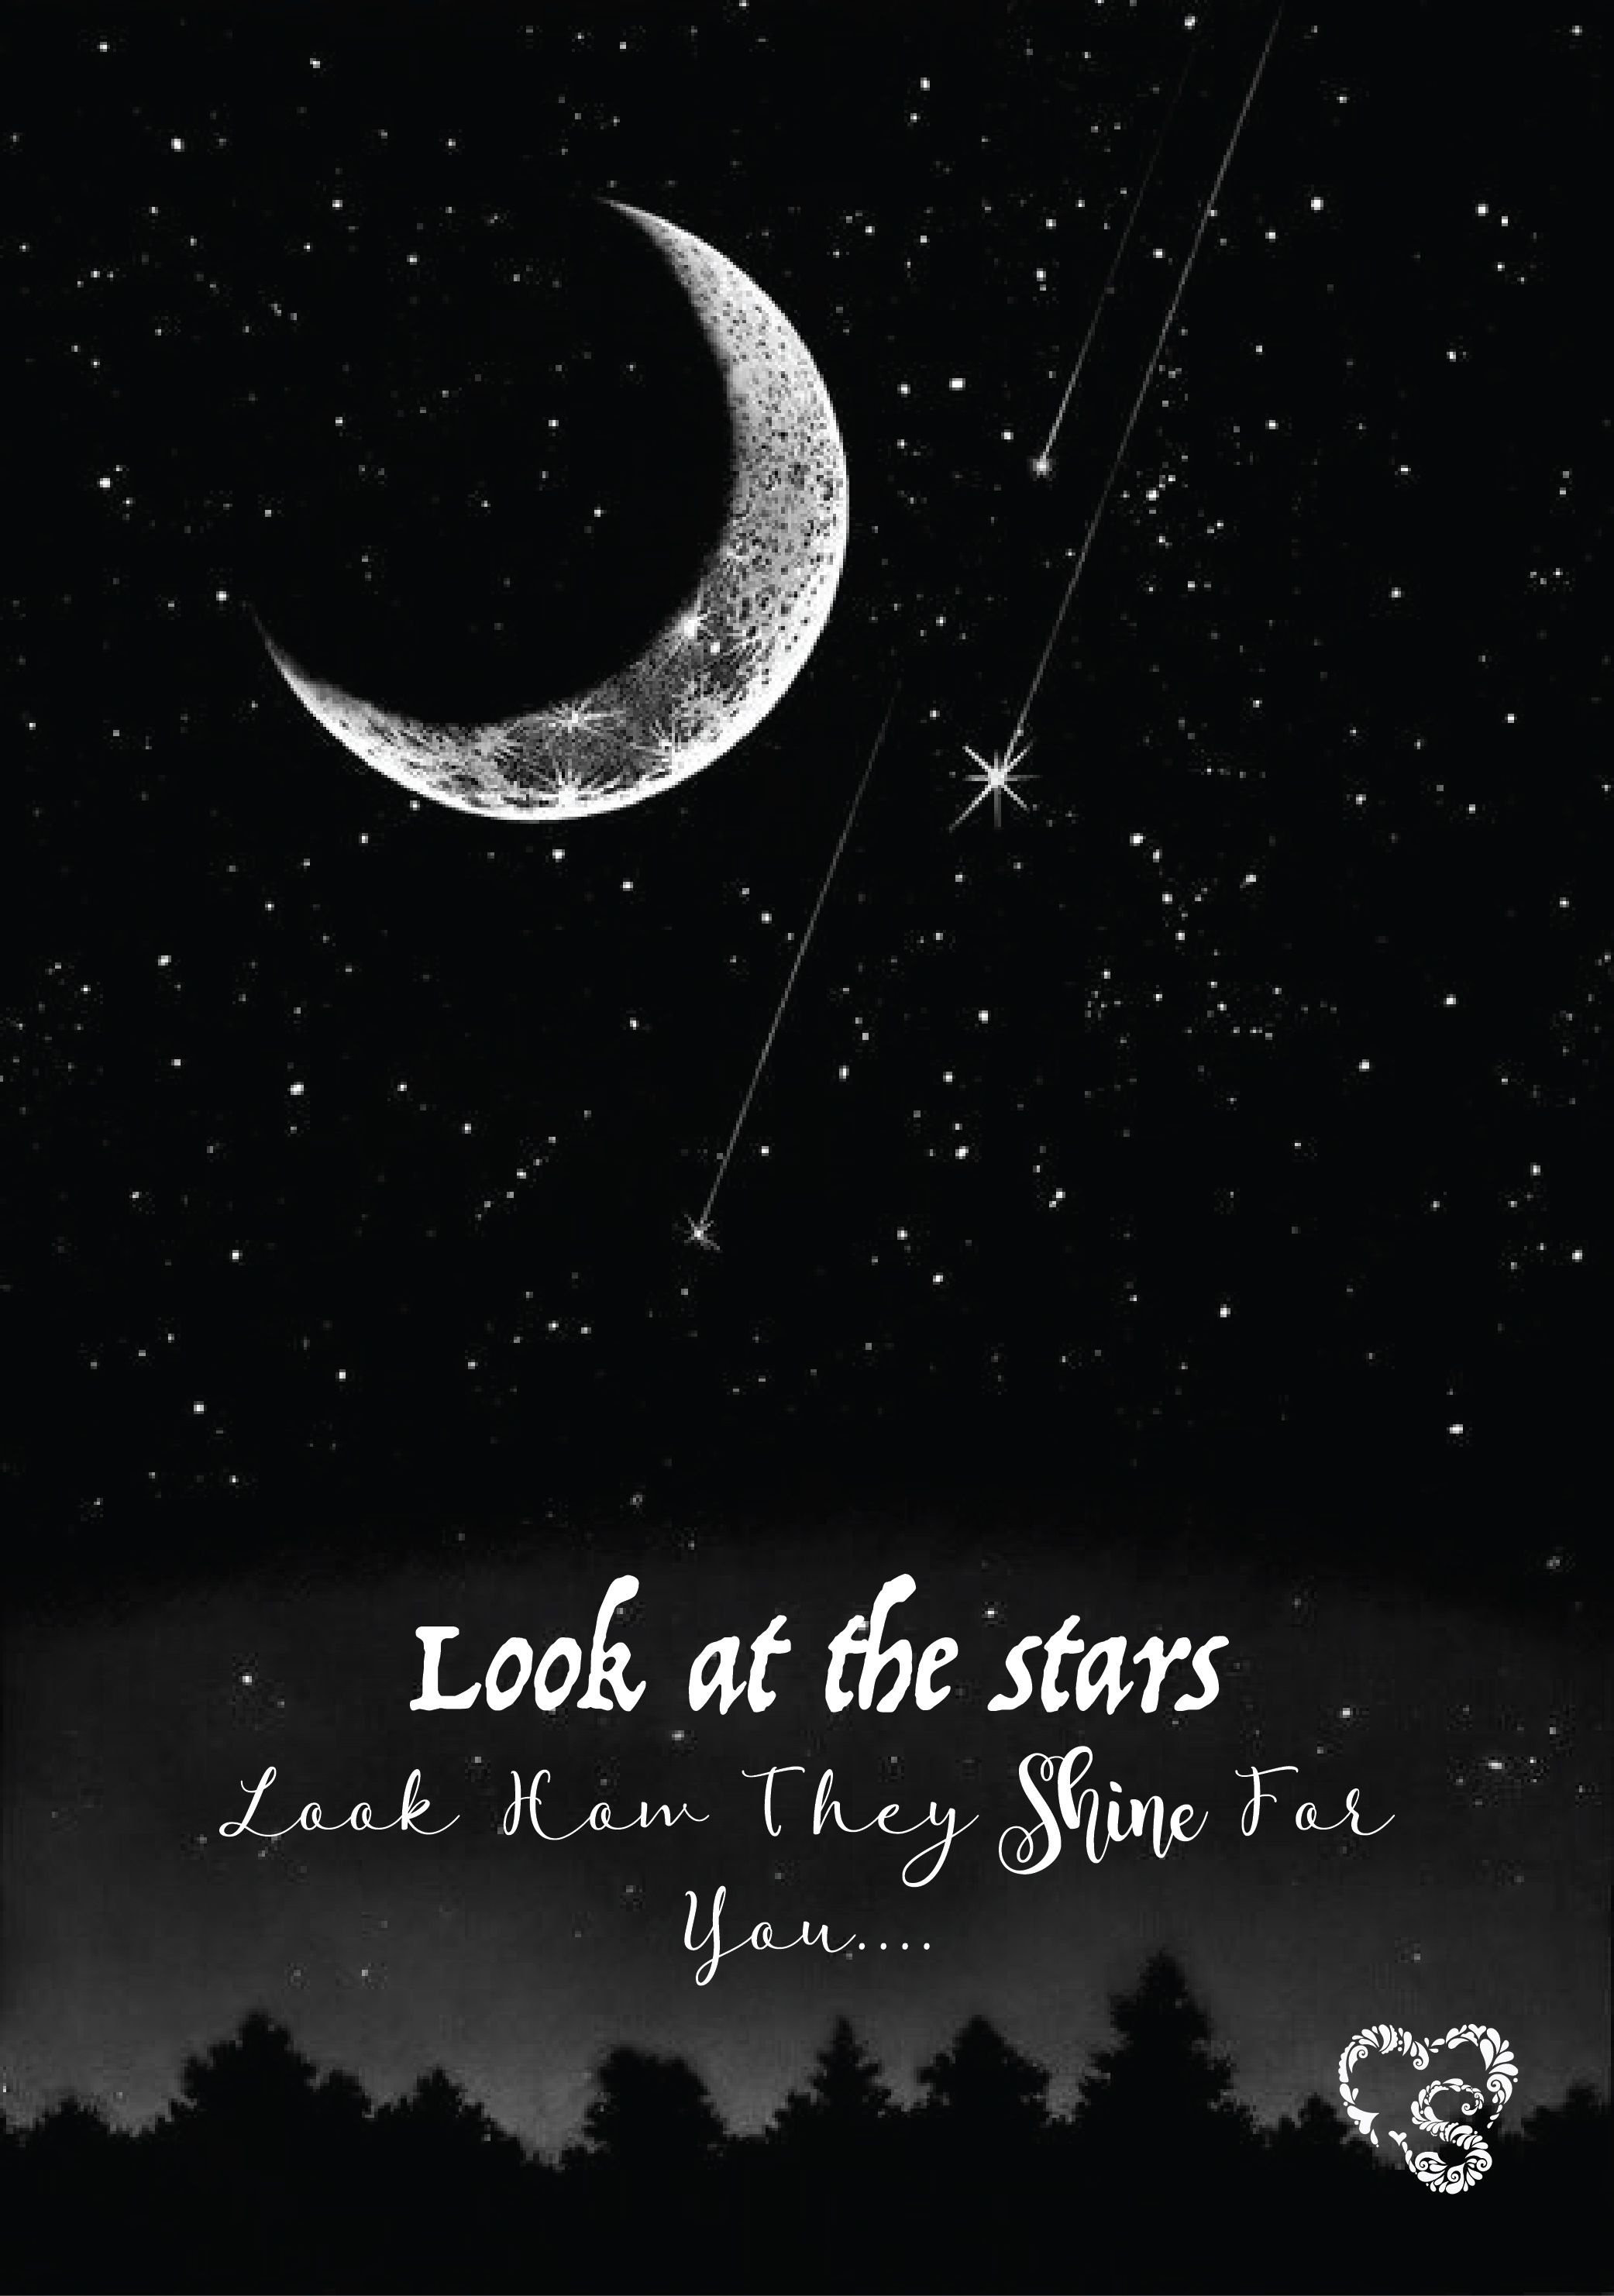 fantacy love moon stars adventure dream art illustration poster